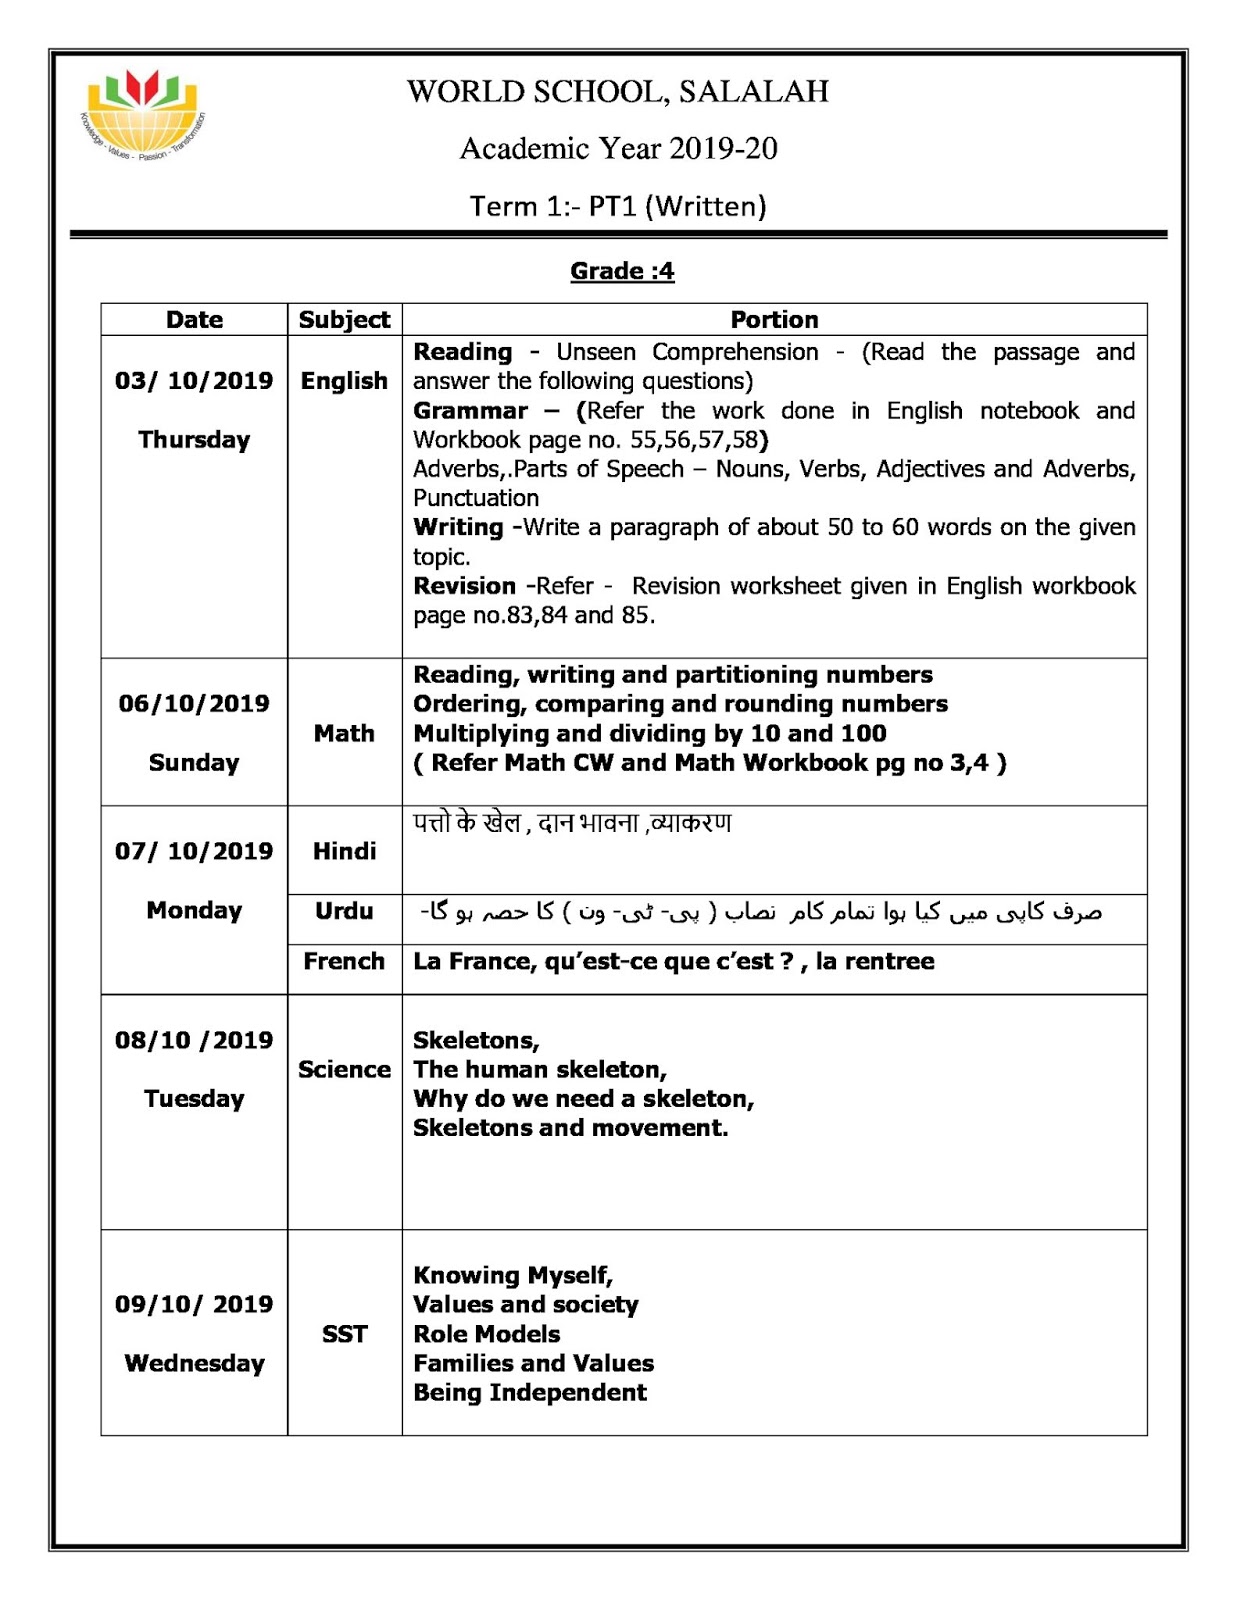 birla-world-school-oman-pt-1-syllabus-for-grade-4